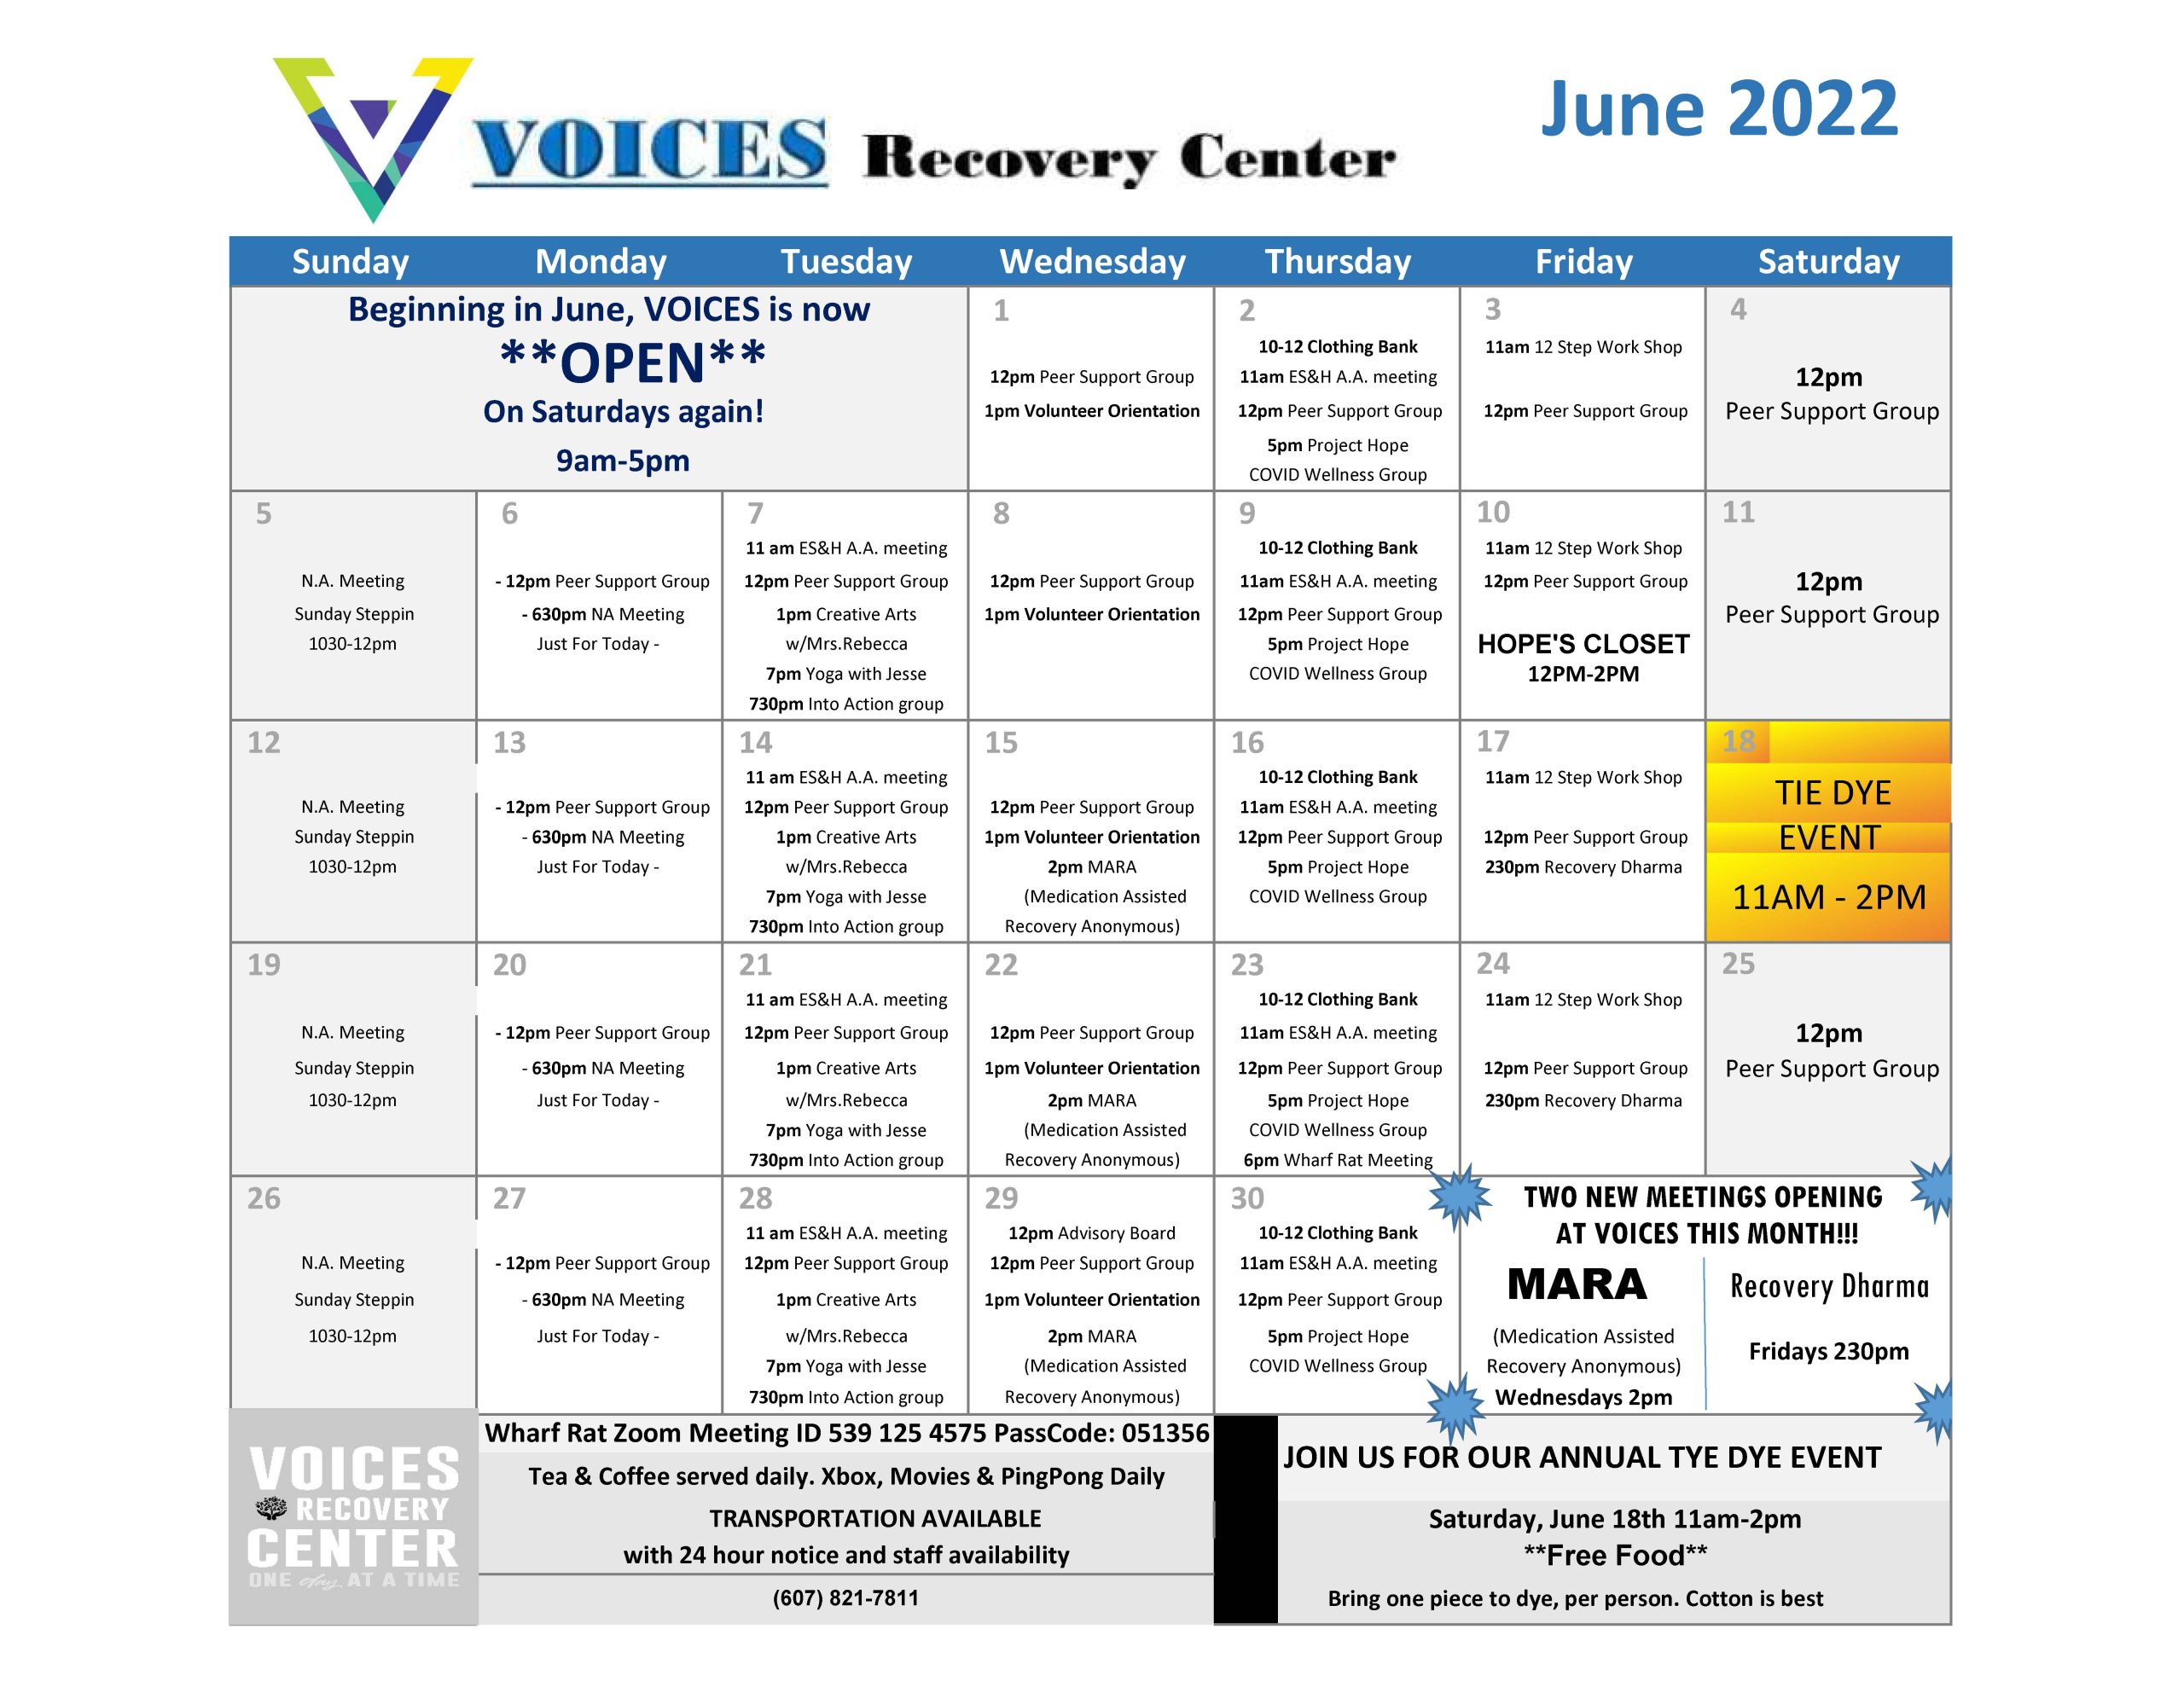 June Calendar 2022 scaled - VOICES Recovery Center June 2022 Calendar